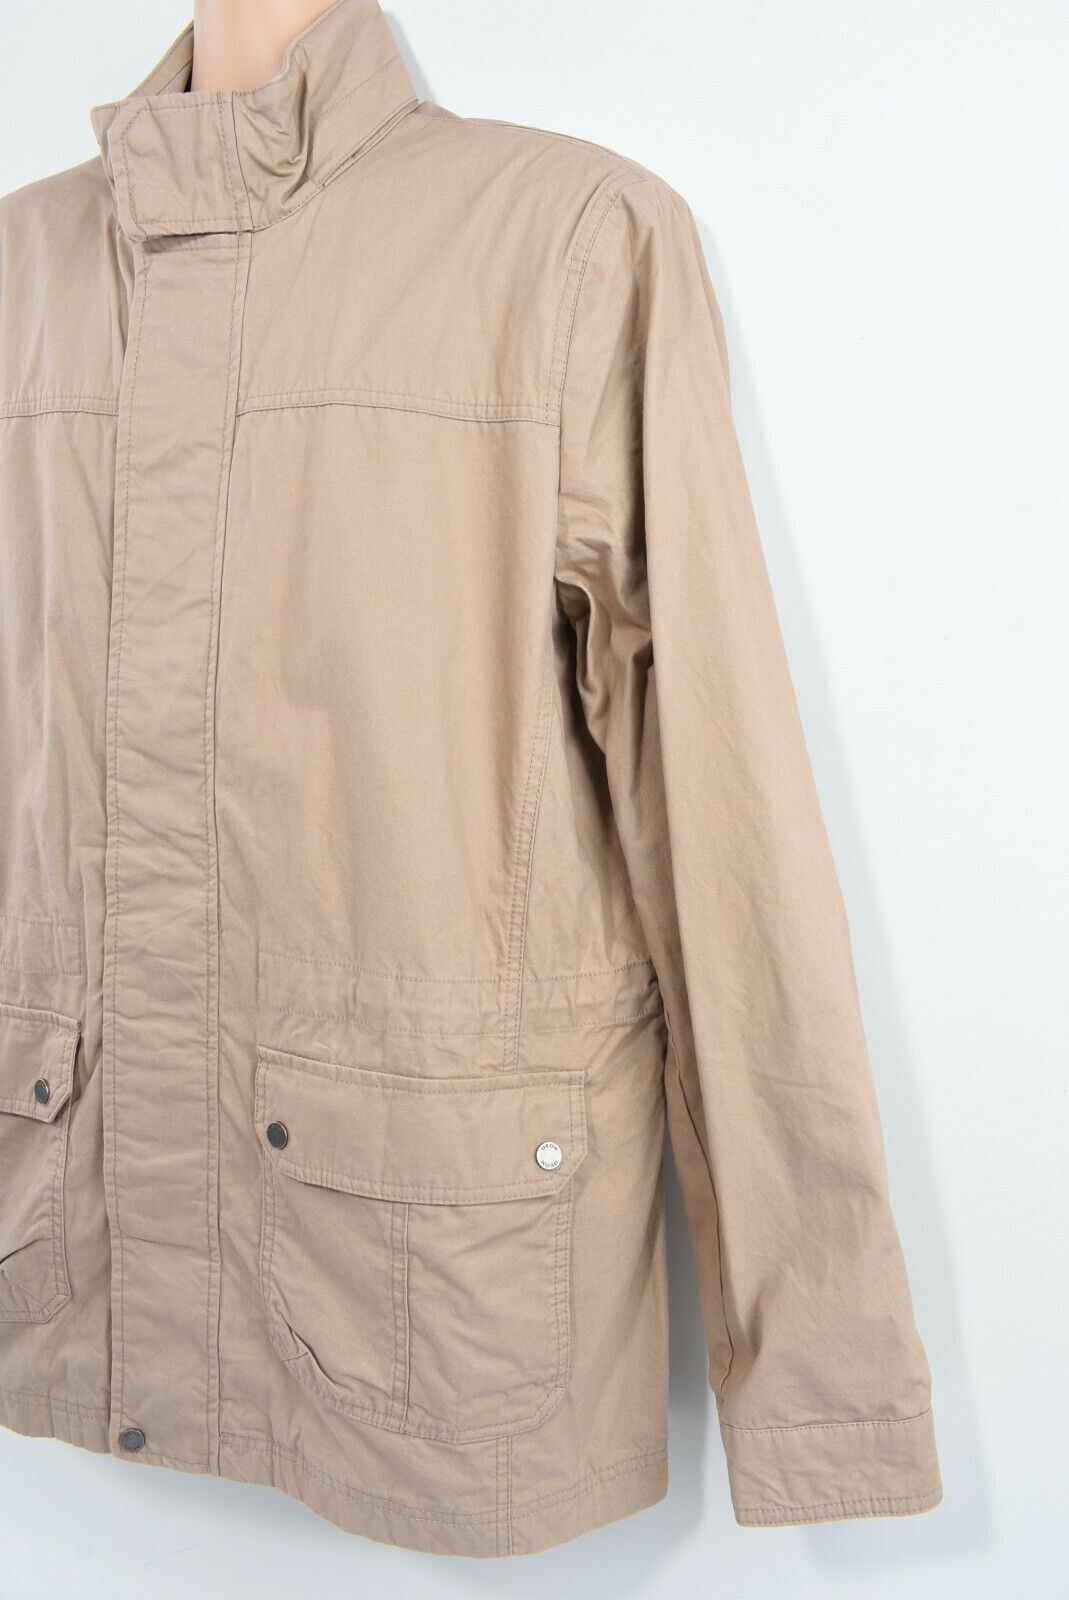 GEOX Men's COBBLESTONE BEIGE Parka Jacket Coat, size 44